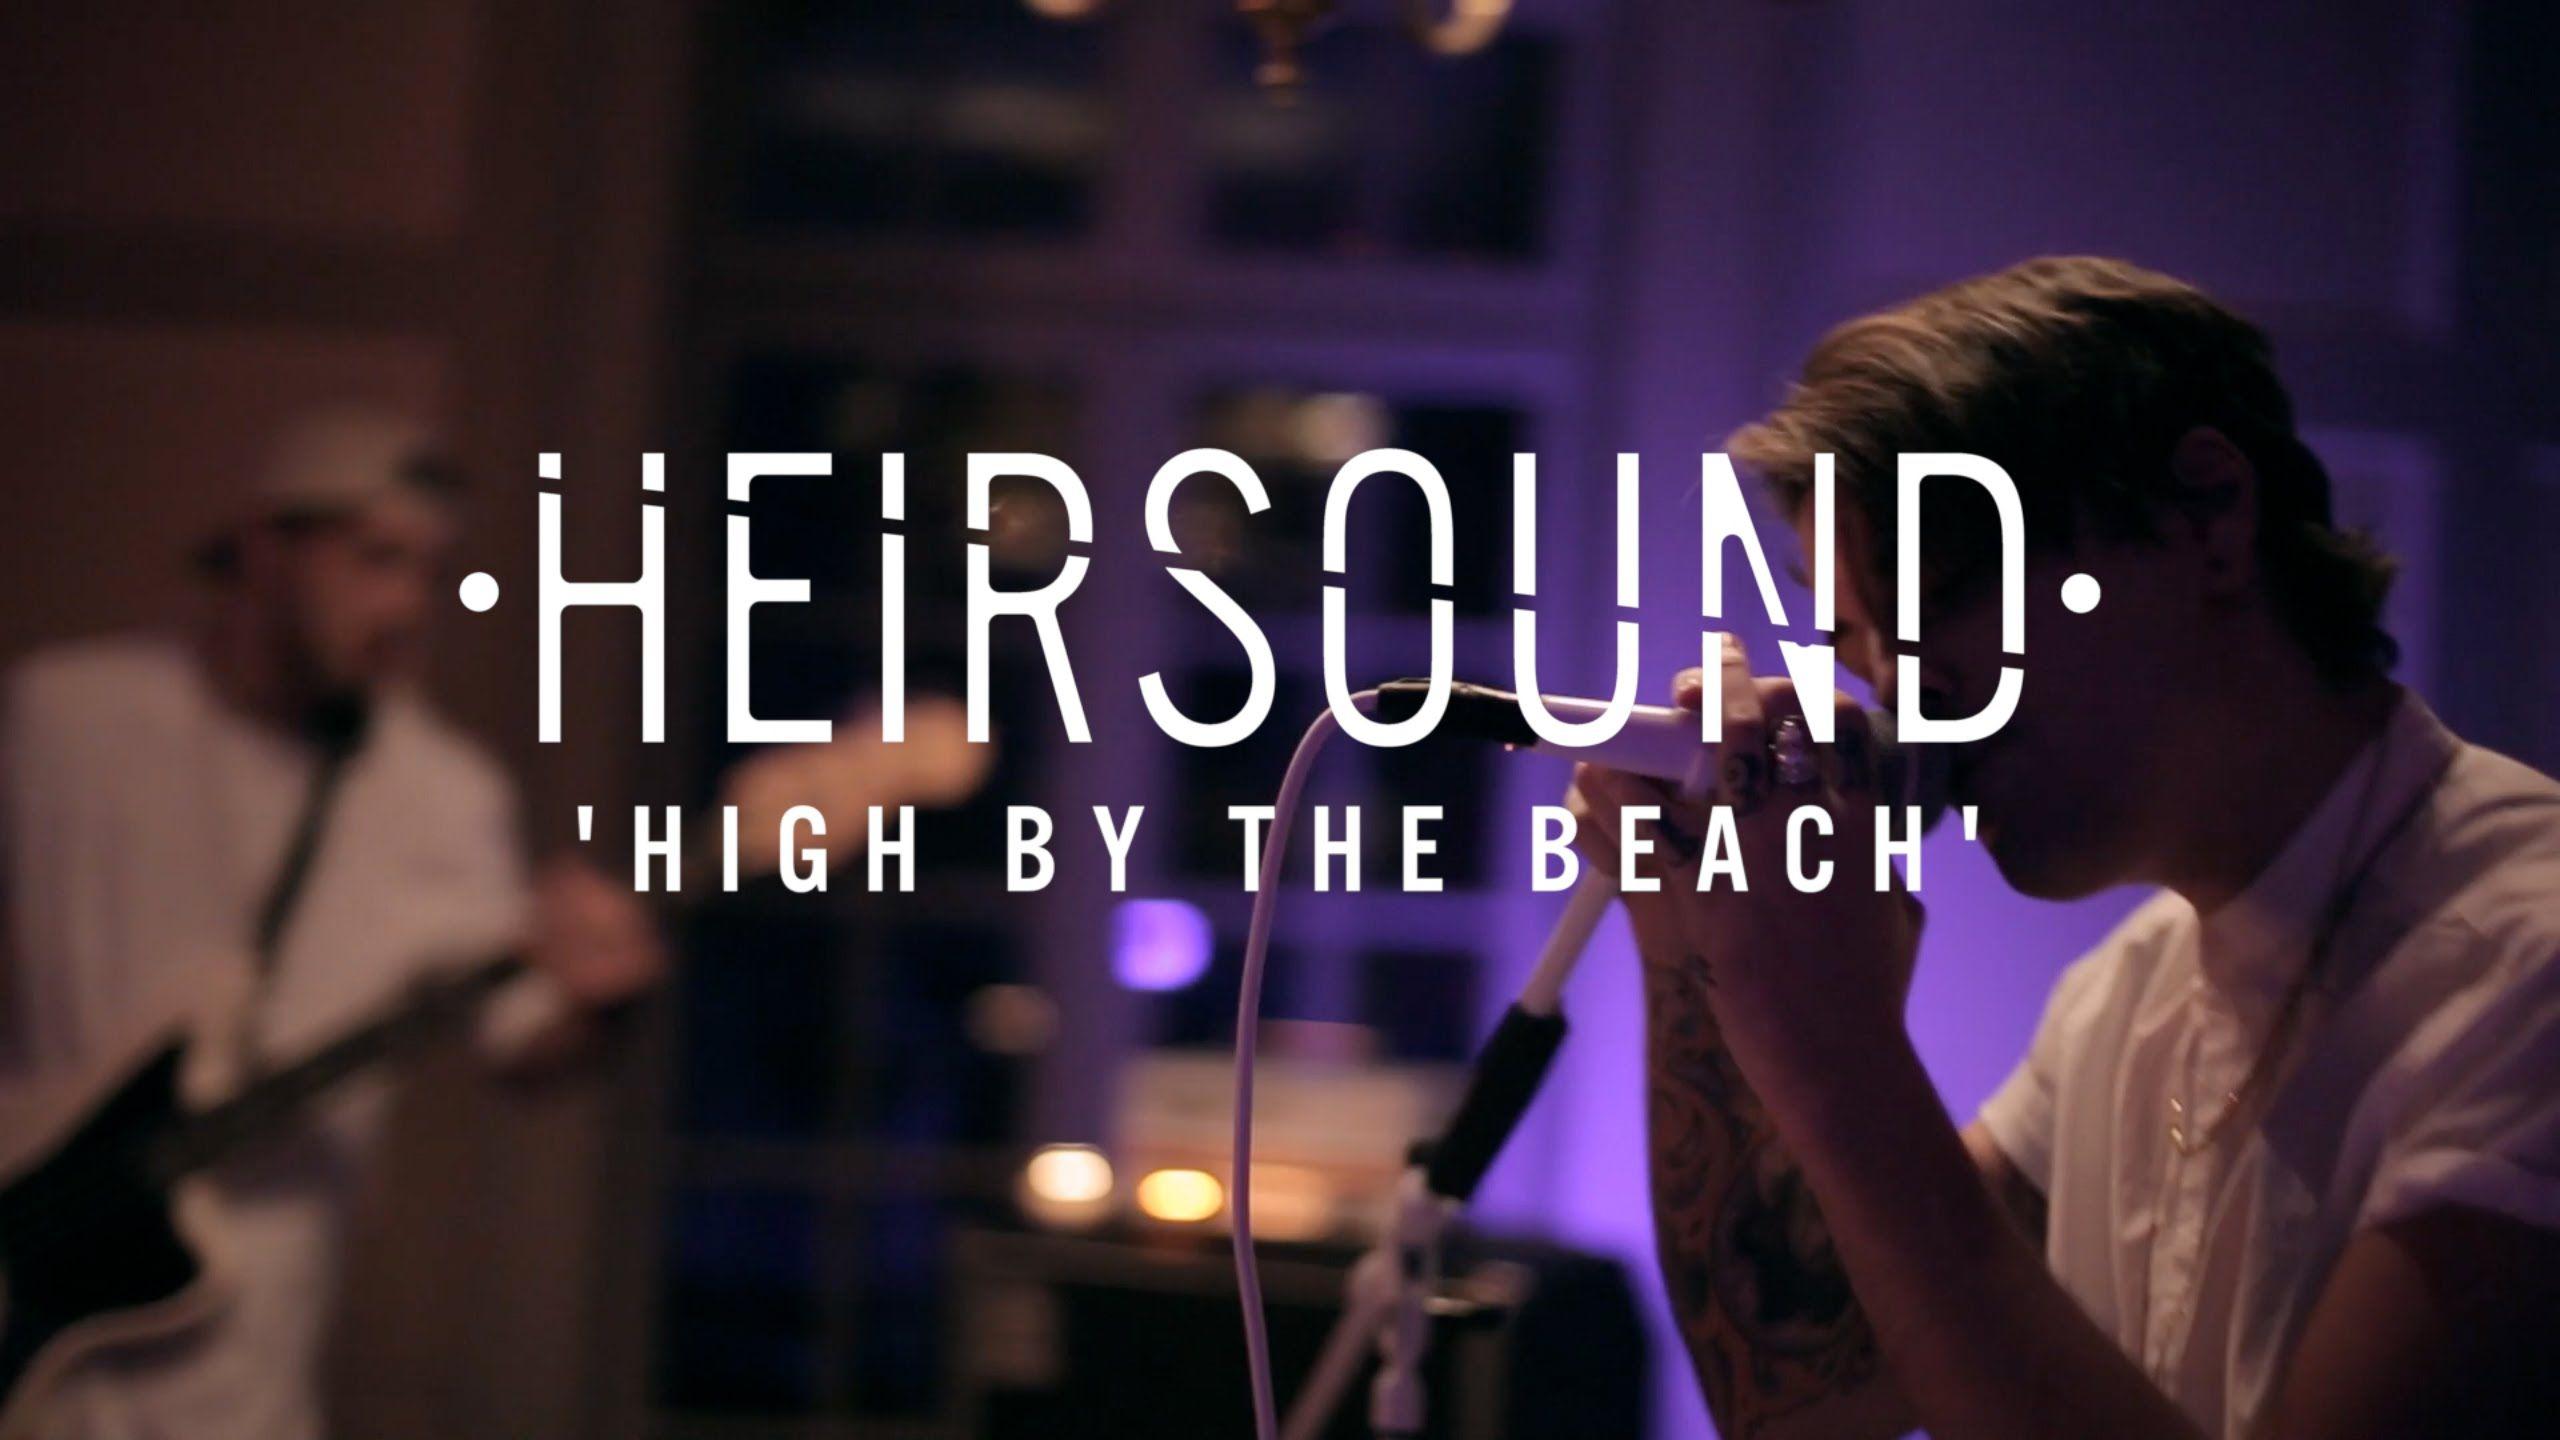 HEIRSOUND By The Beach [Originally by Lana Del Rey]